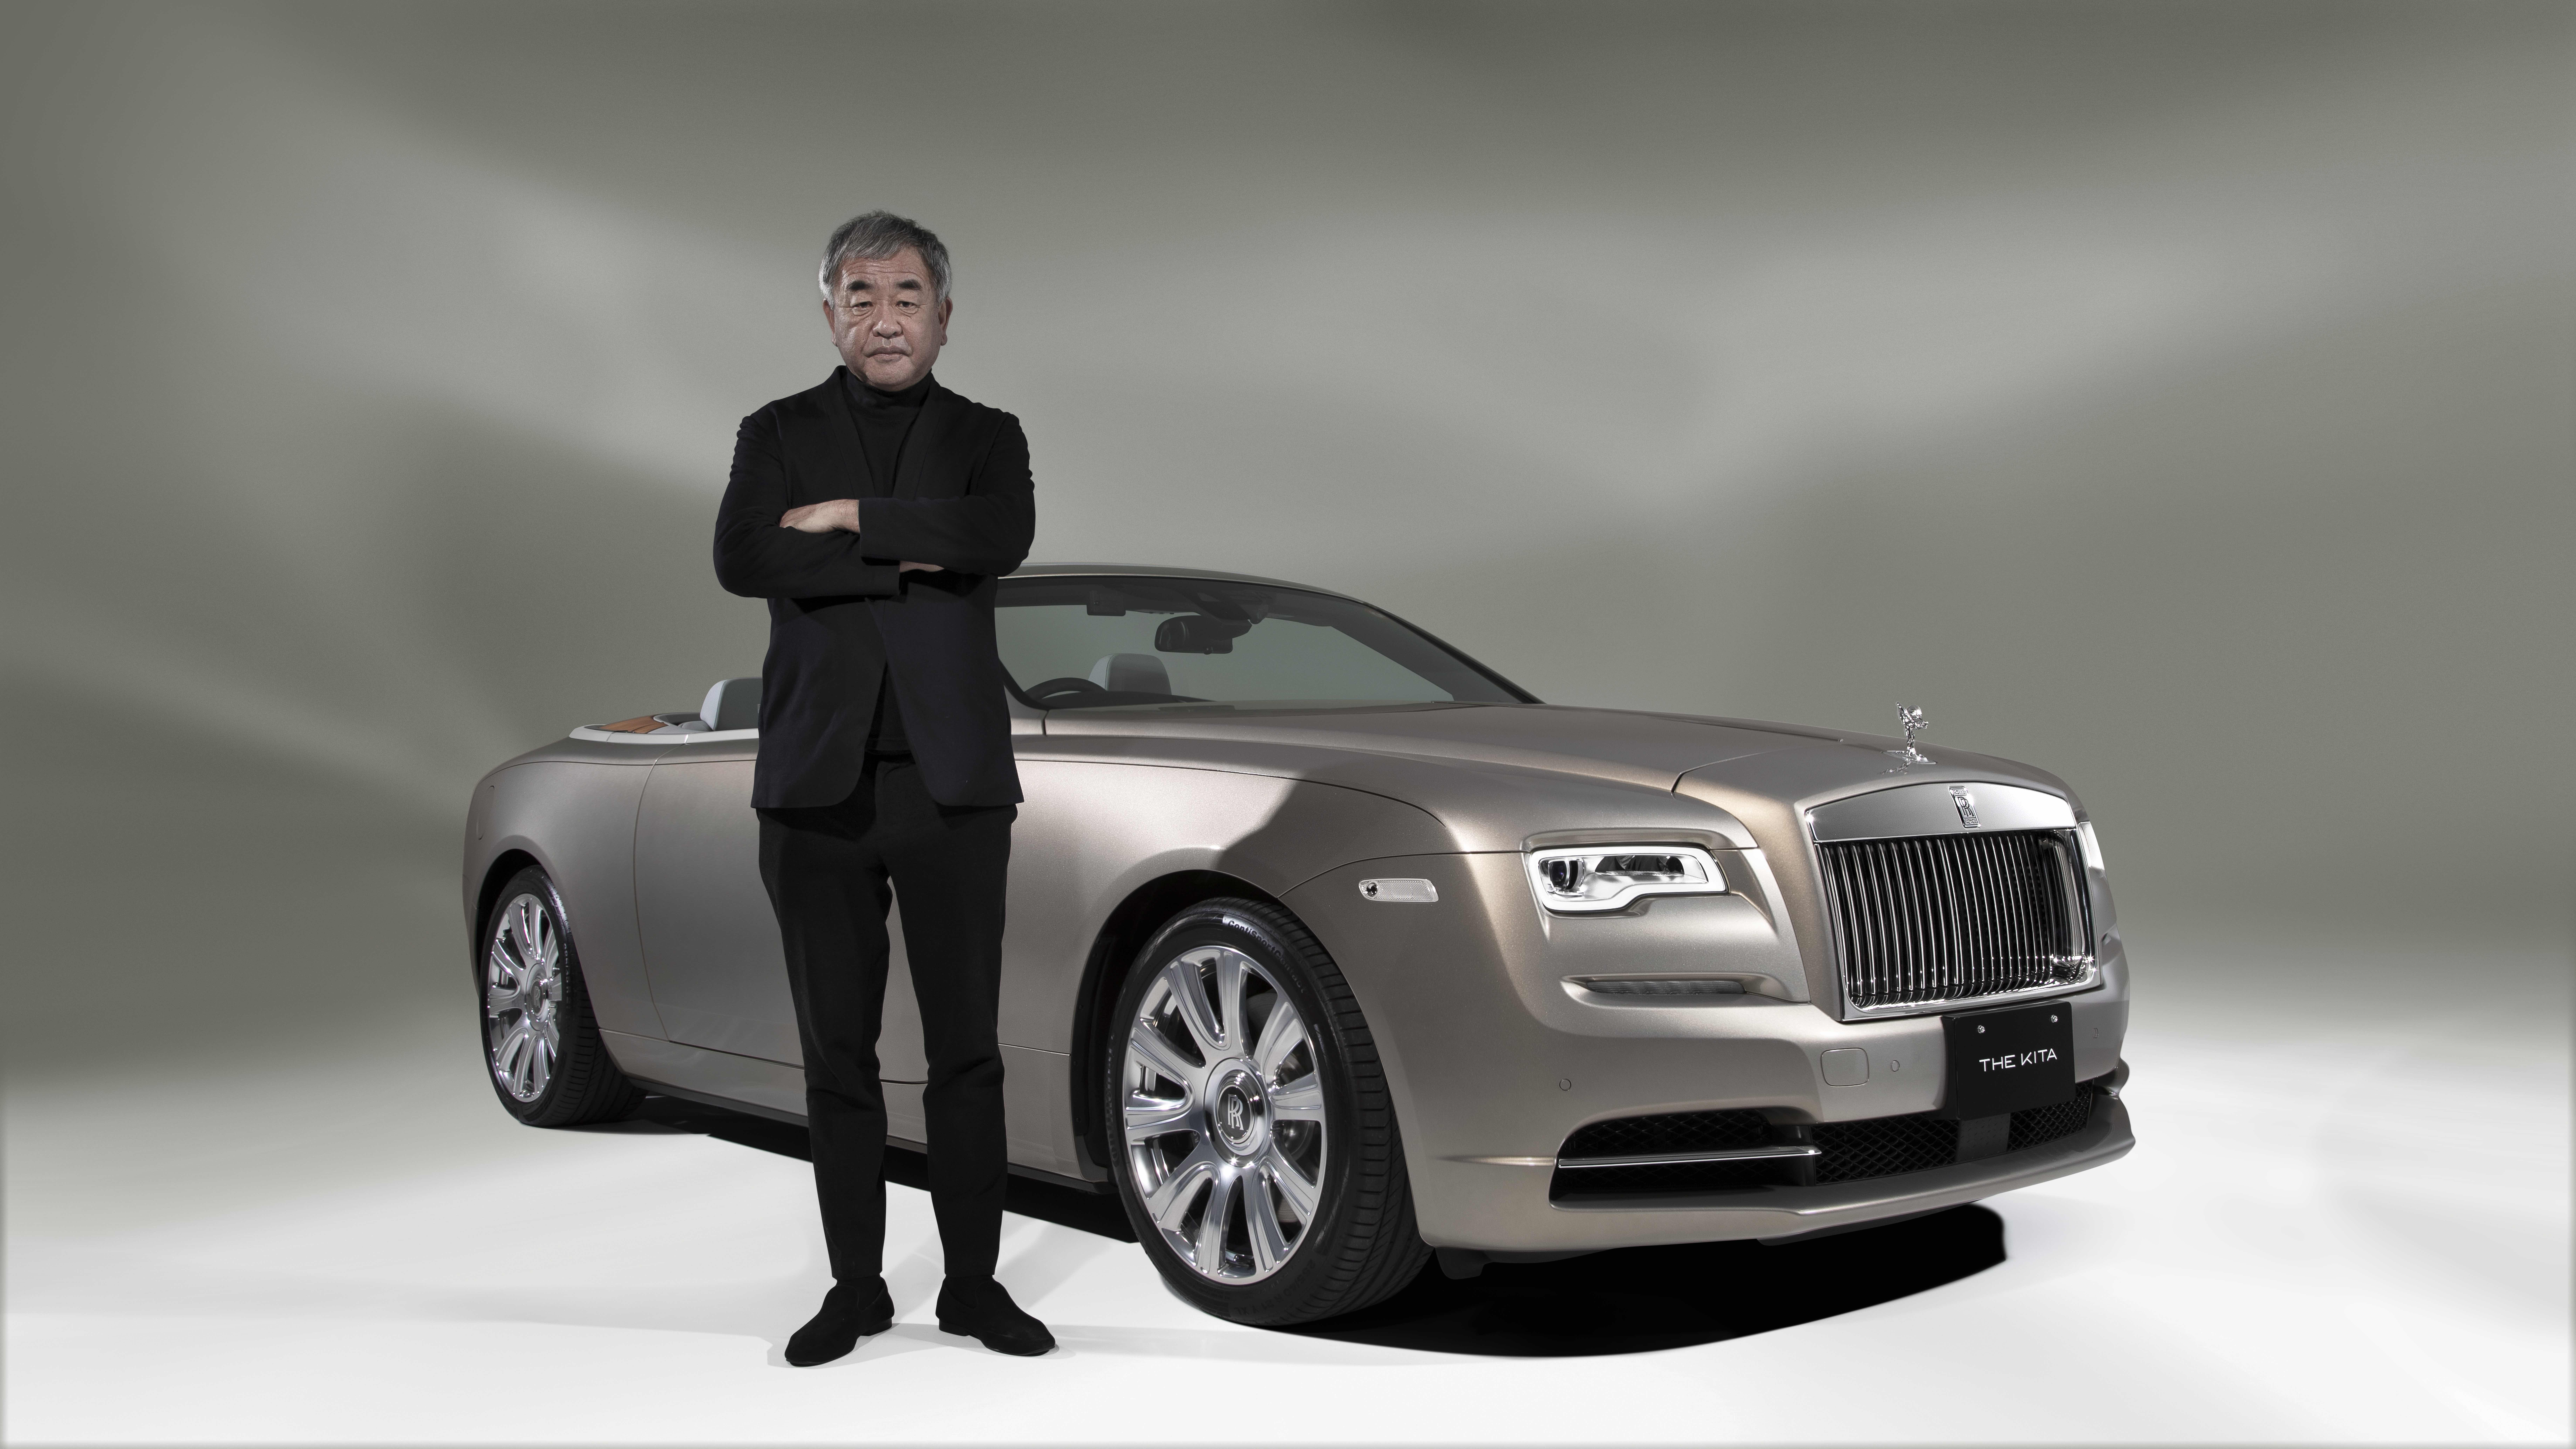 Architect Kengo Kuma poses with the Bespoke Rolls Royce Dawn.